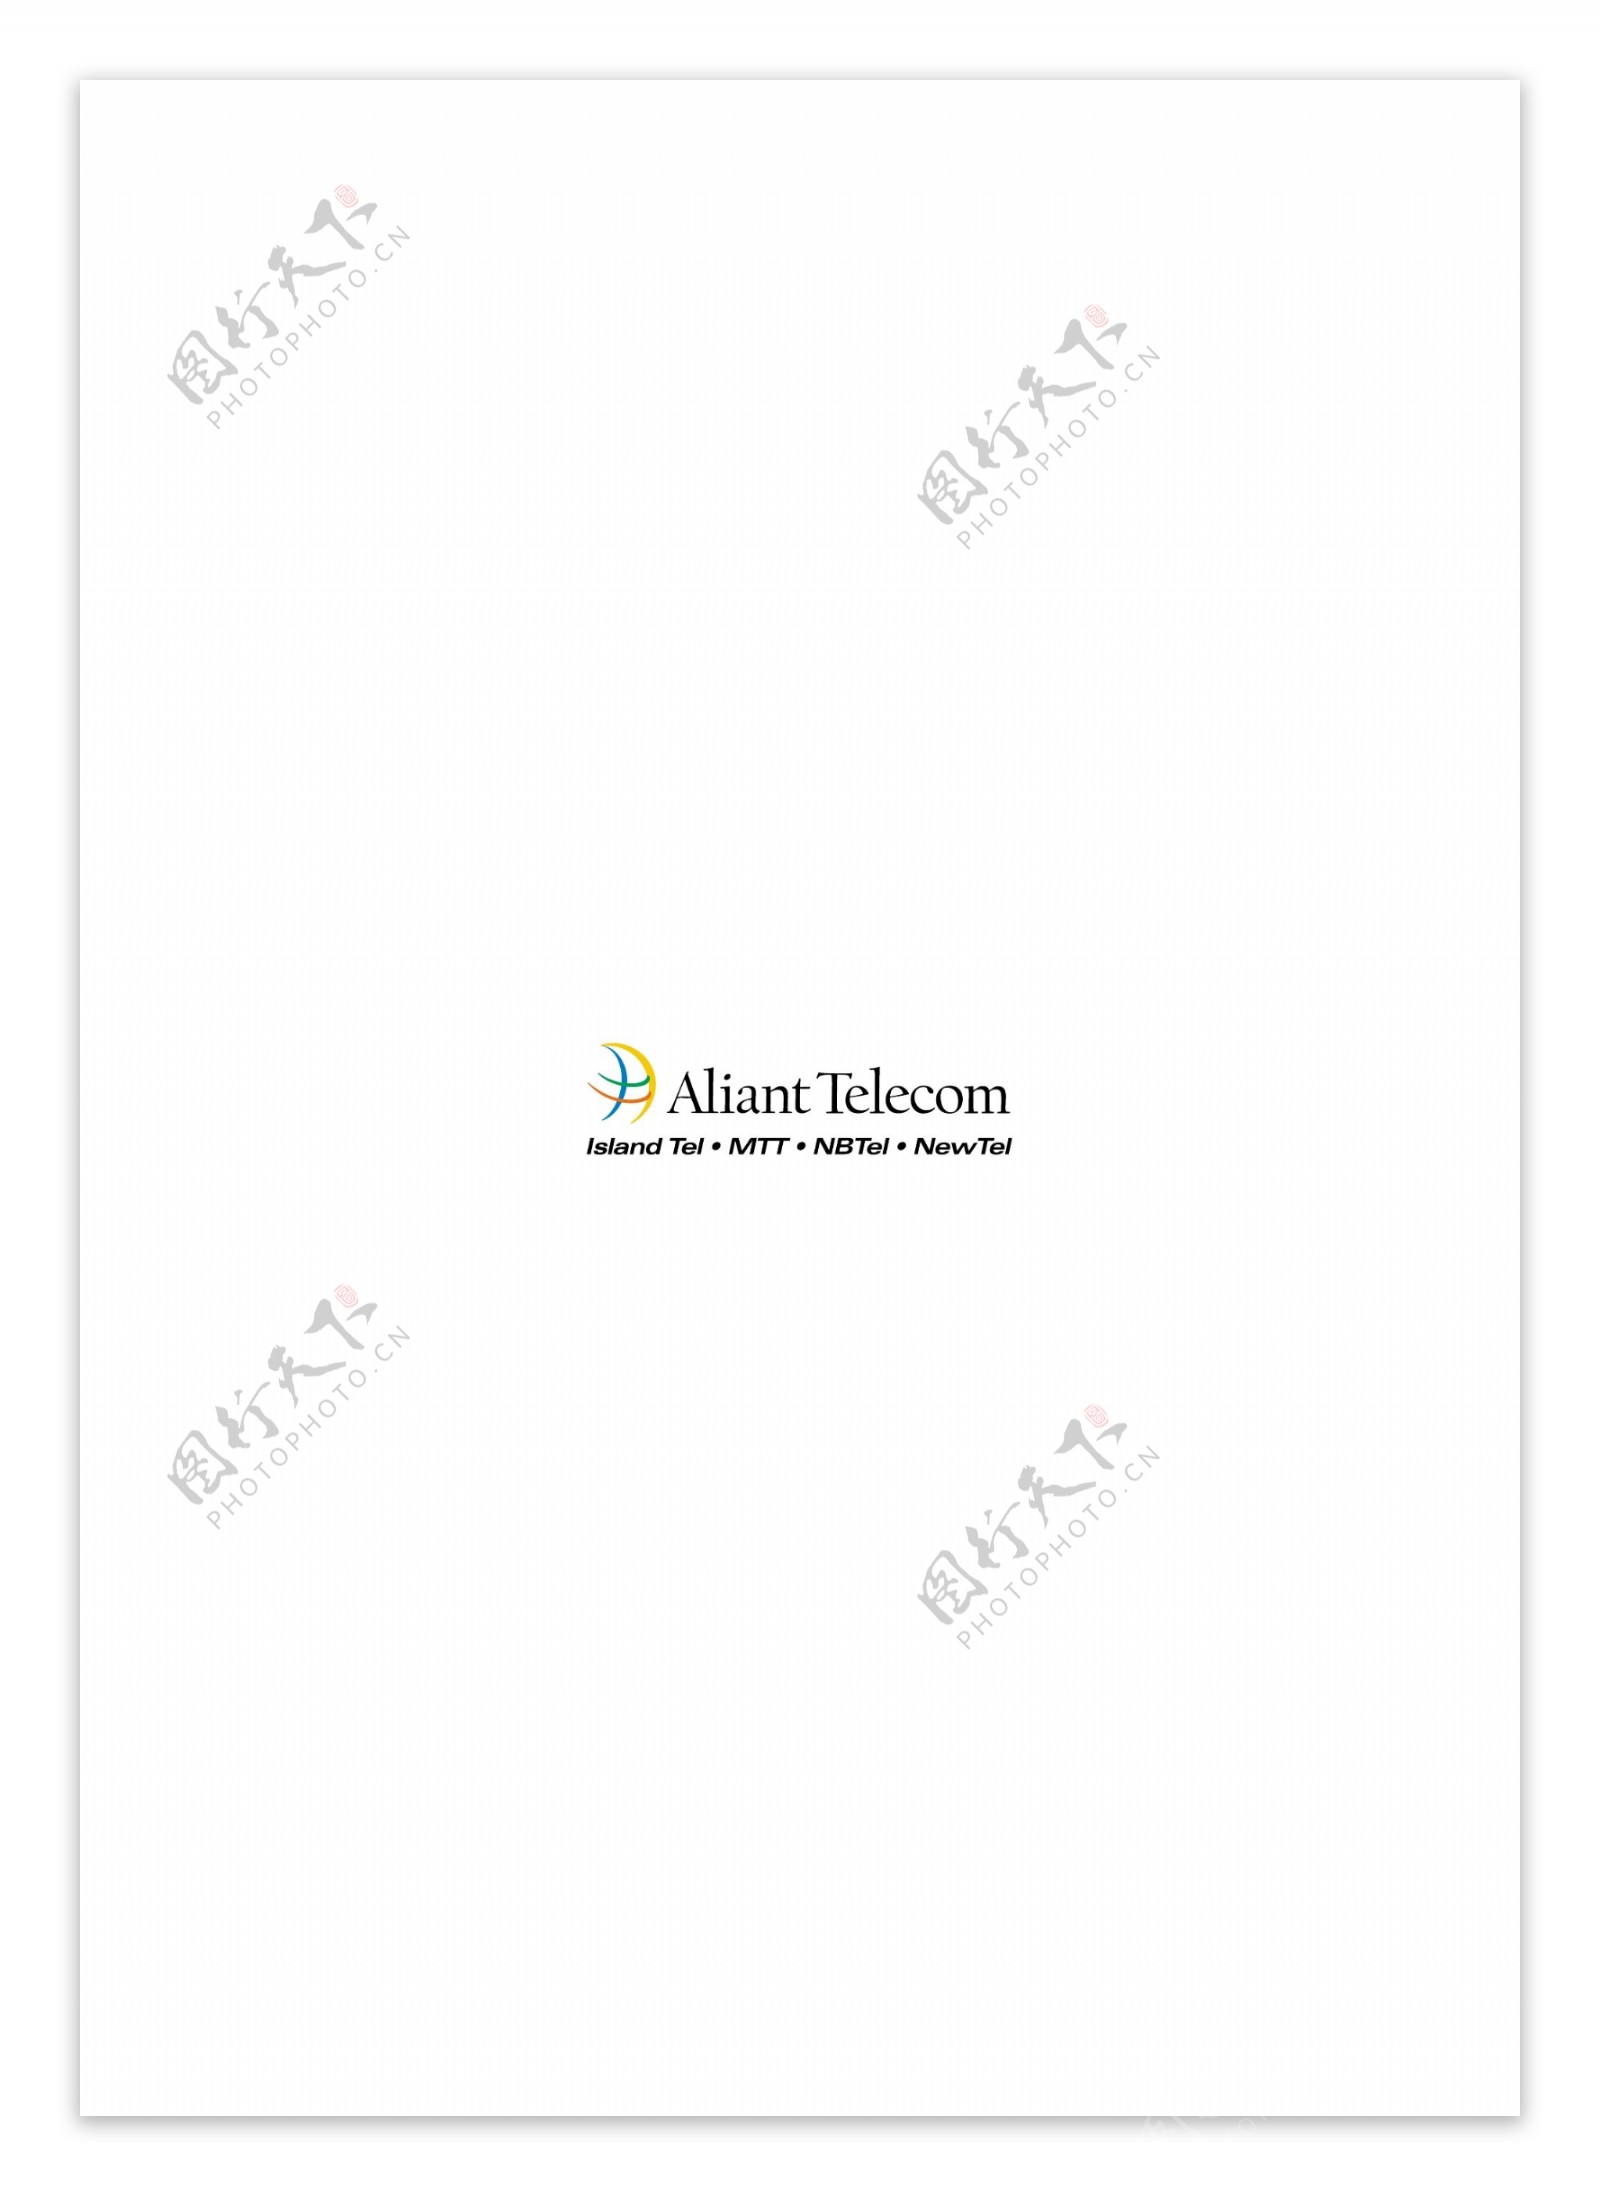 AliantTelecomlogo设计欣赏AliantTelecom通讯公司标志下载标志设计欣赏